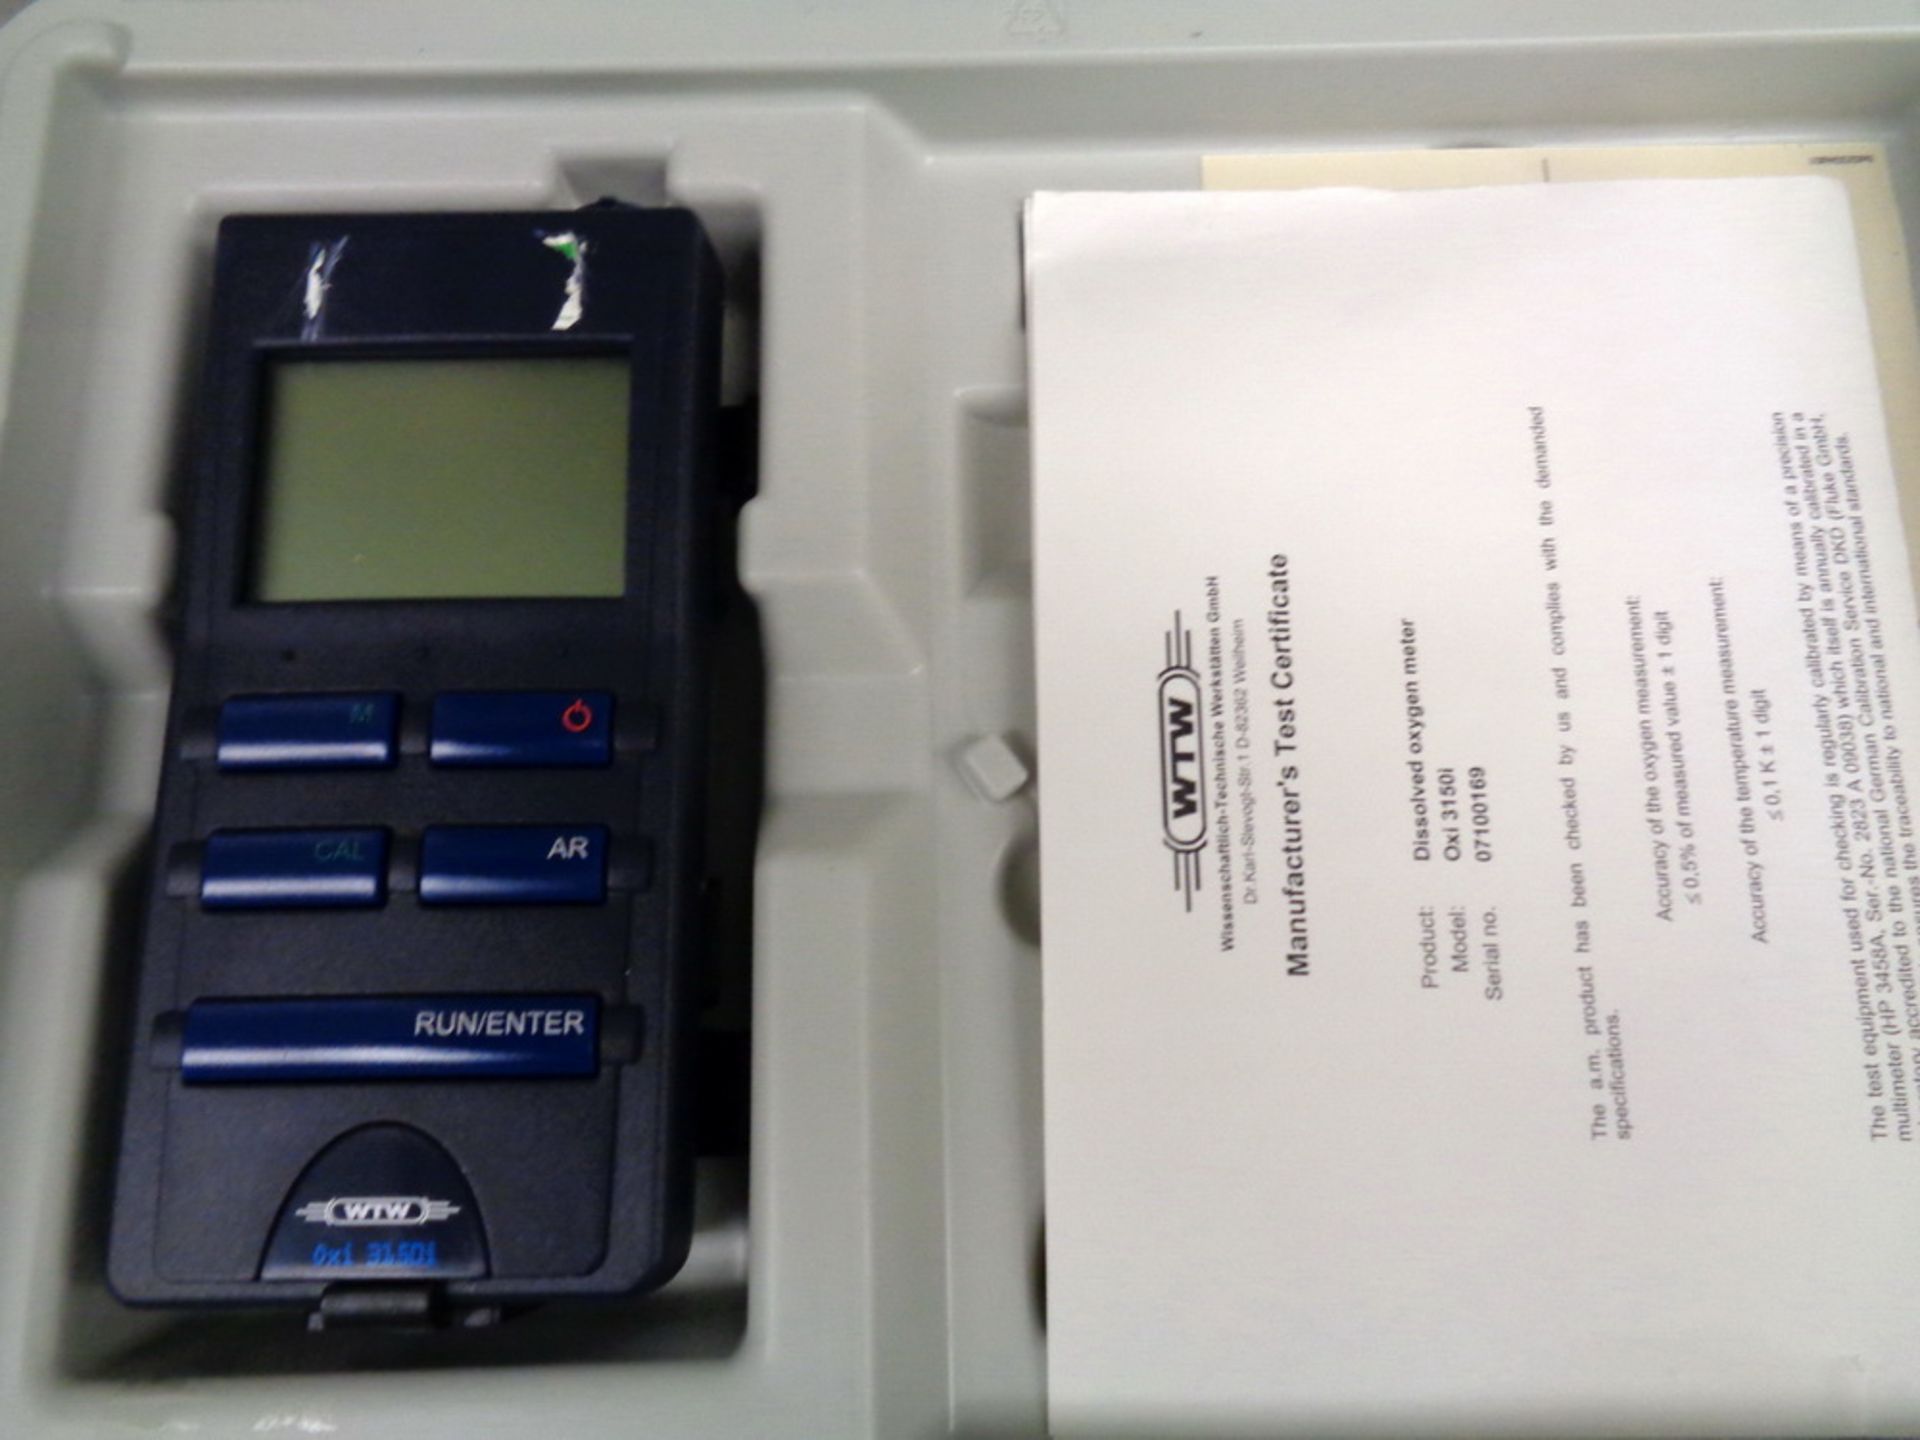 WTW Handheld Oxygen Meter, Model Oxi3150i/set